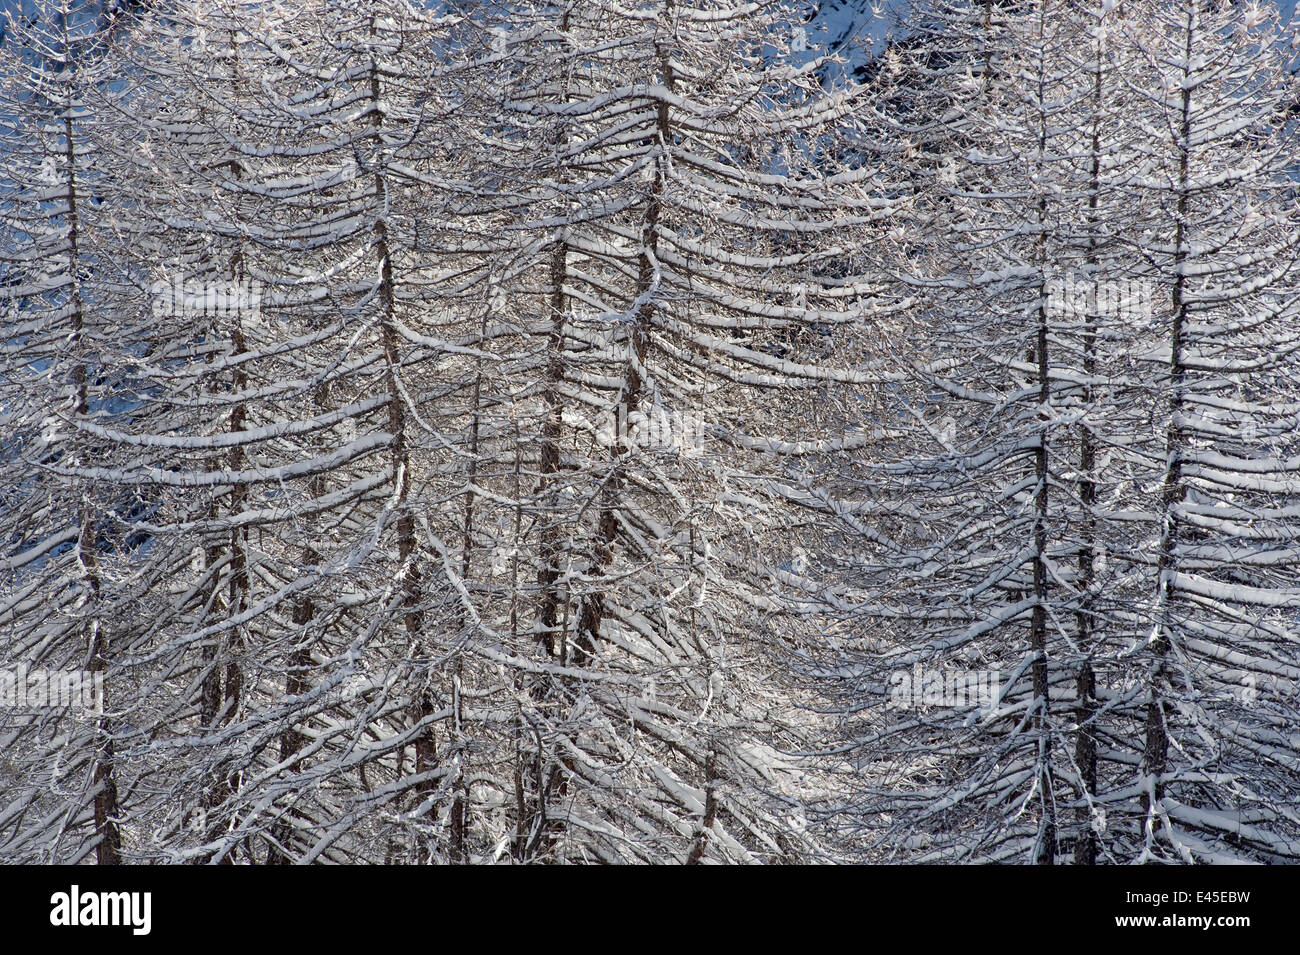 European Larch (Larix decidua) trees covered in snow, Gran Paradiso National Park, Italy, November 2008 Stock Photo